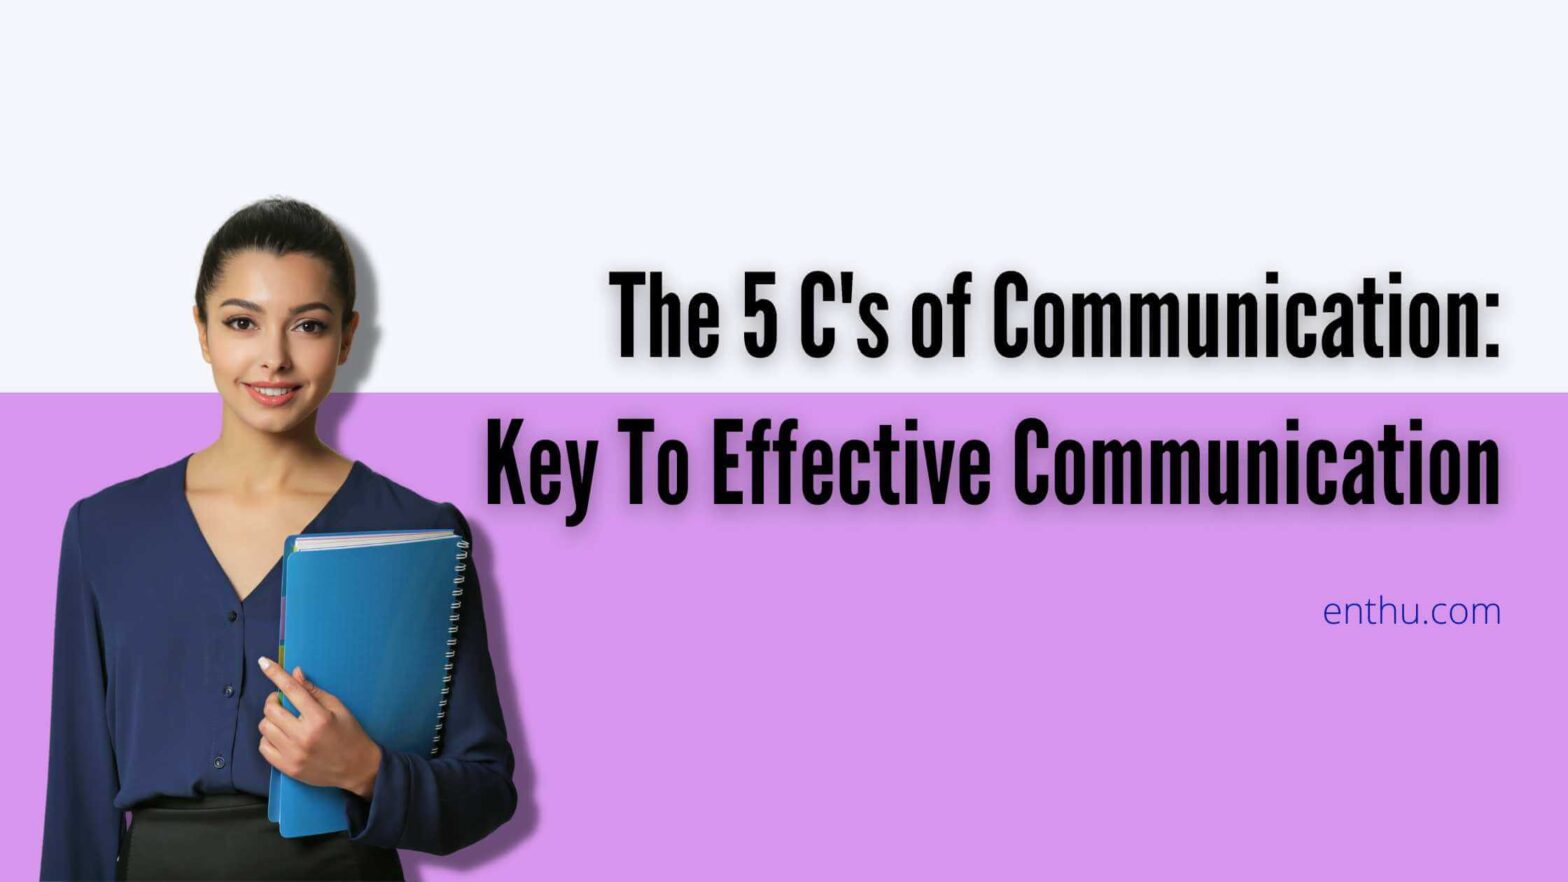 5 c of Communication